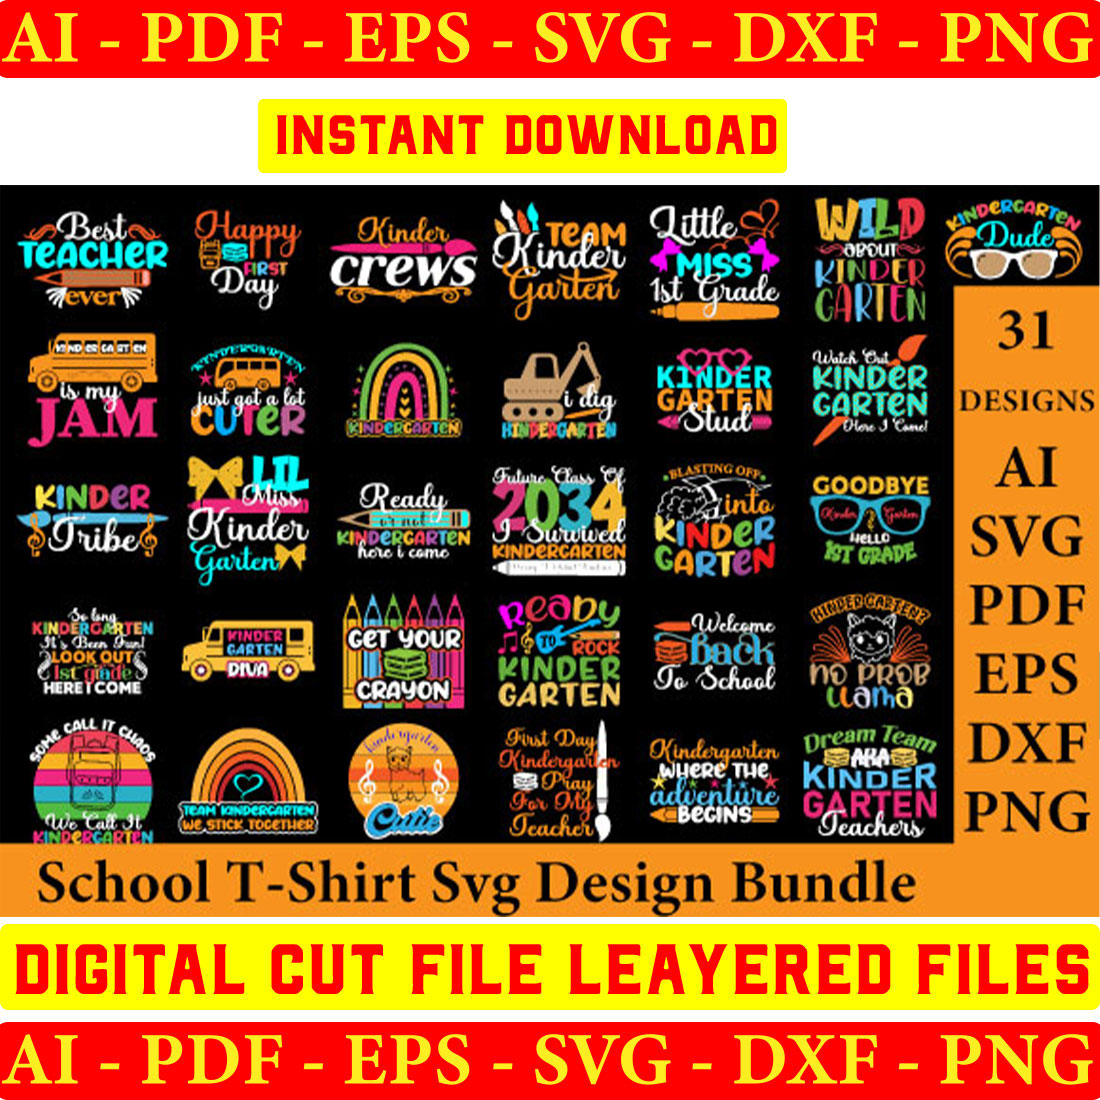 School T-shirt Svg Design Bundle cover image.